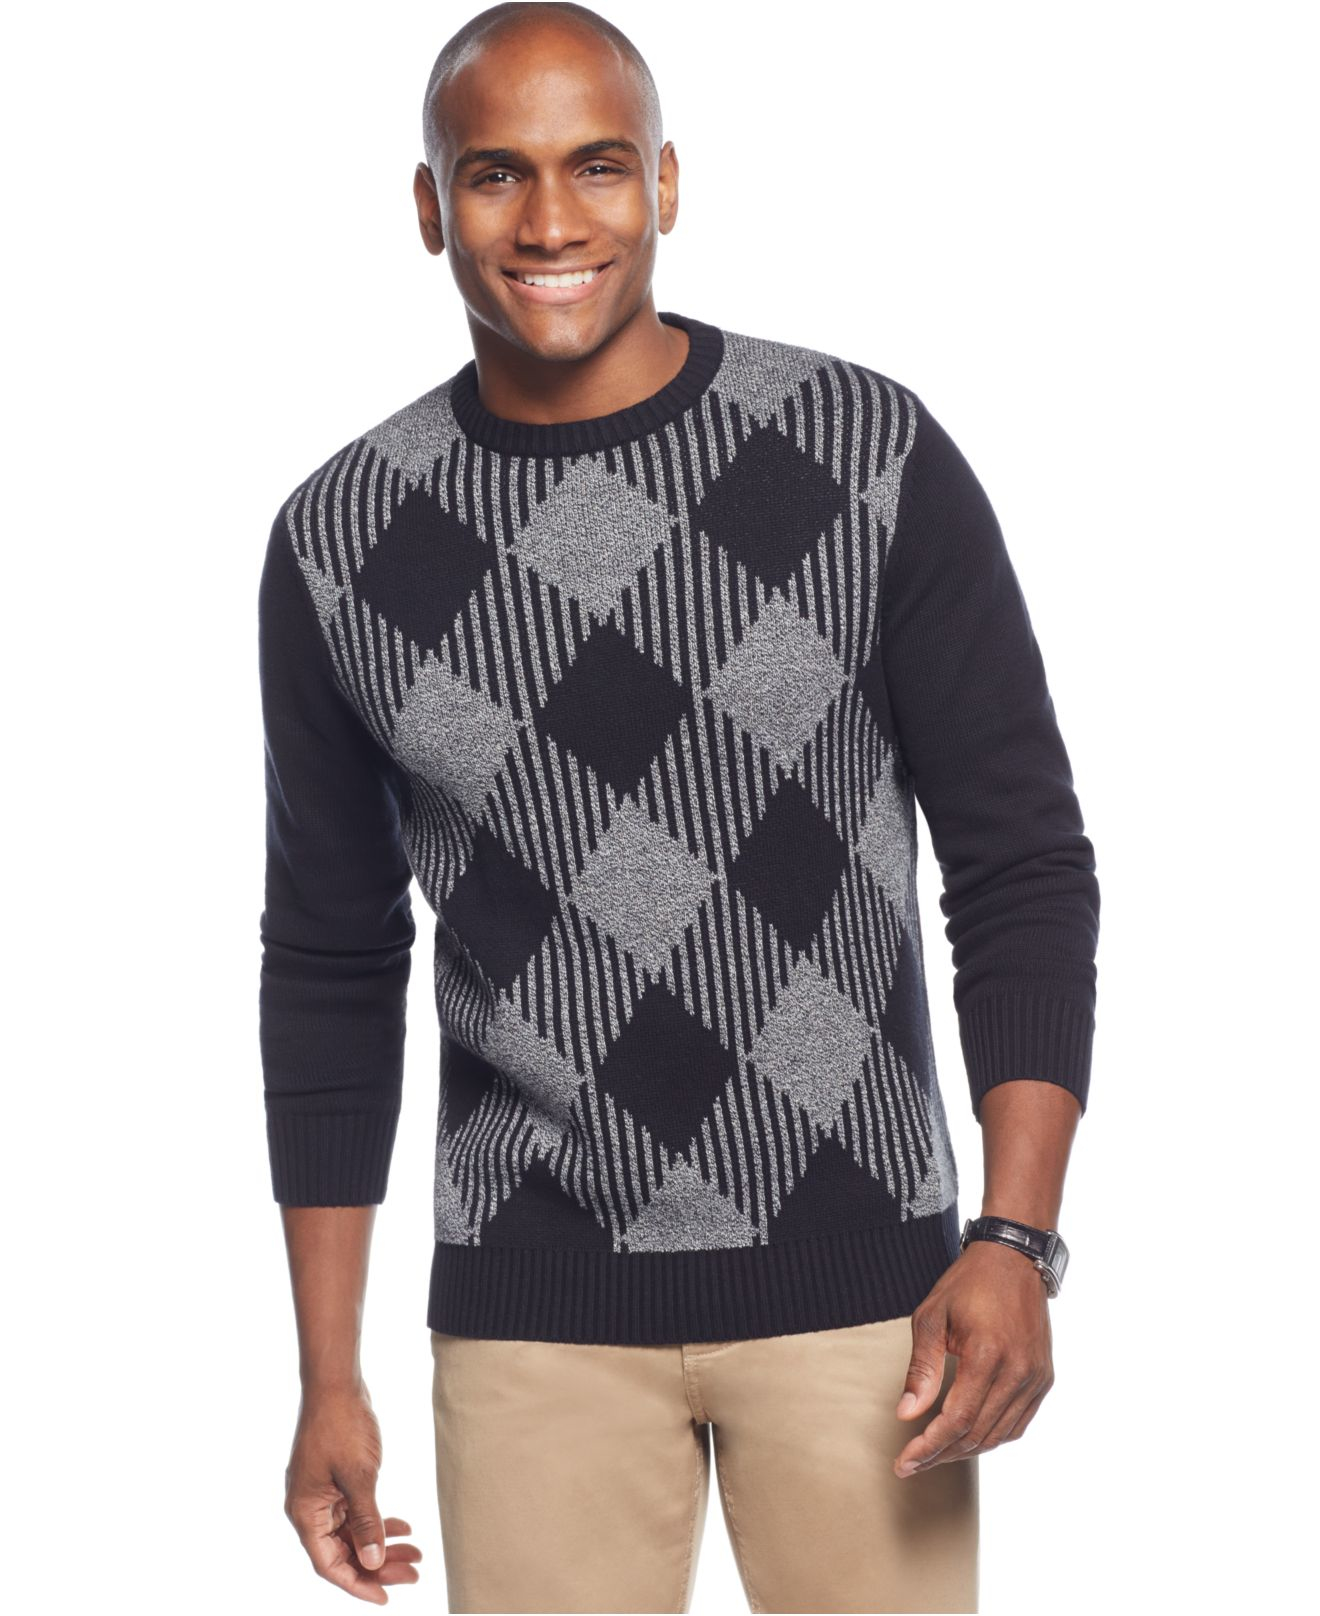 Lyst - Geoffrey Beene Diamond Print Crewneck Sweater in Black for Men